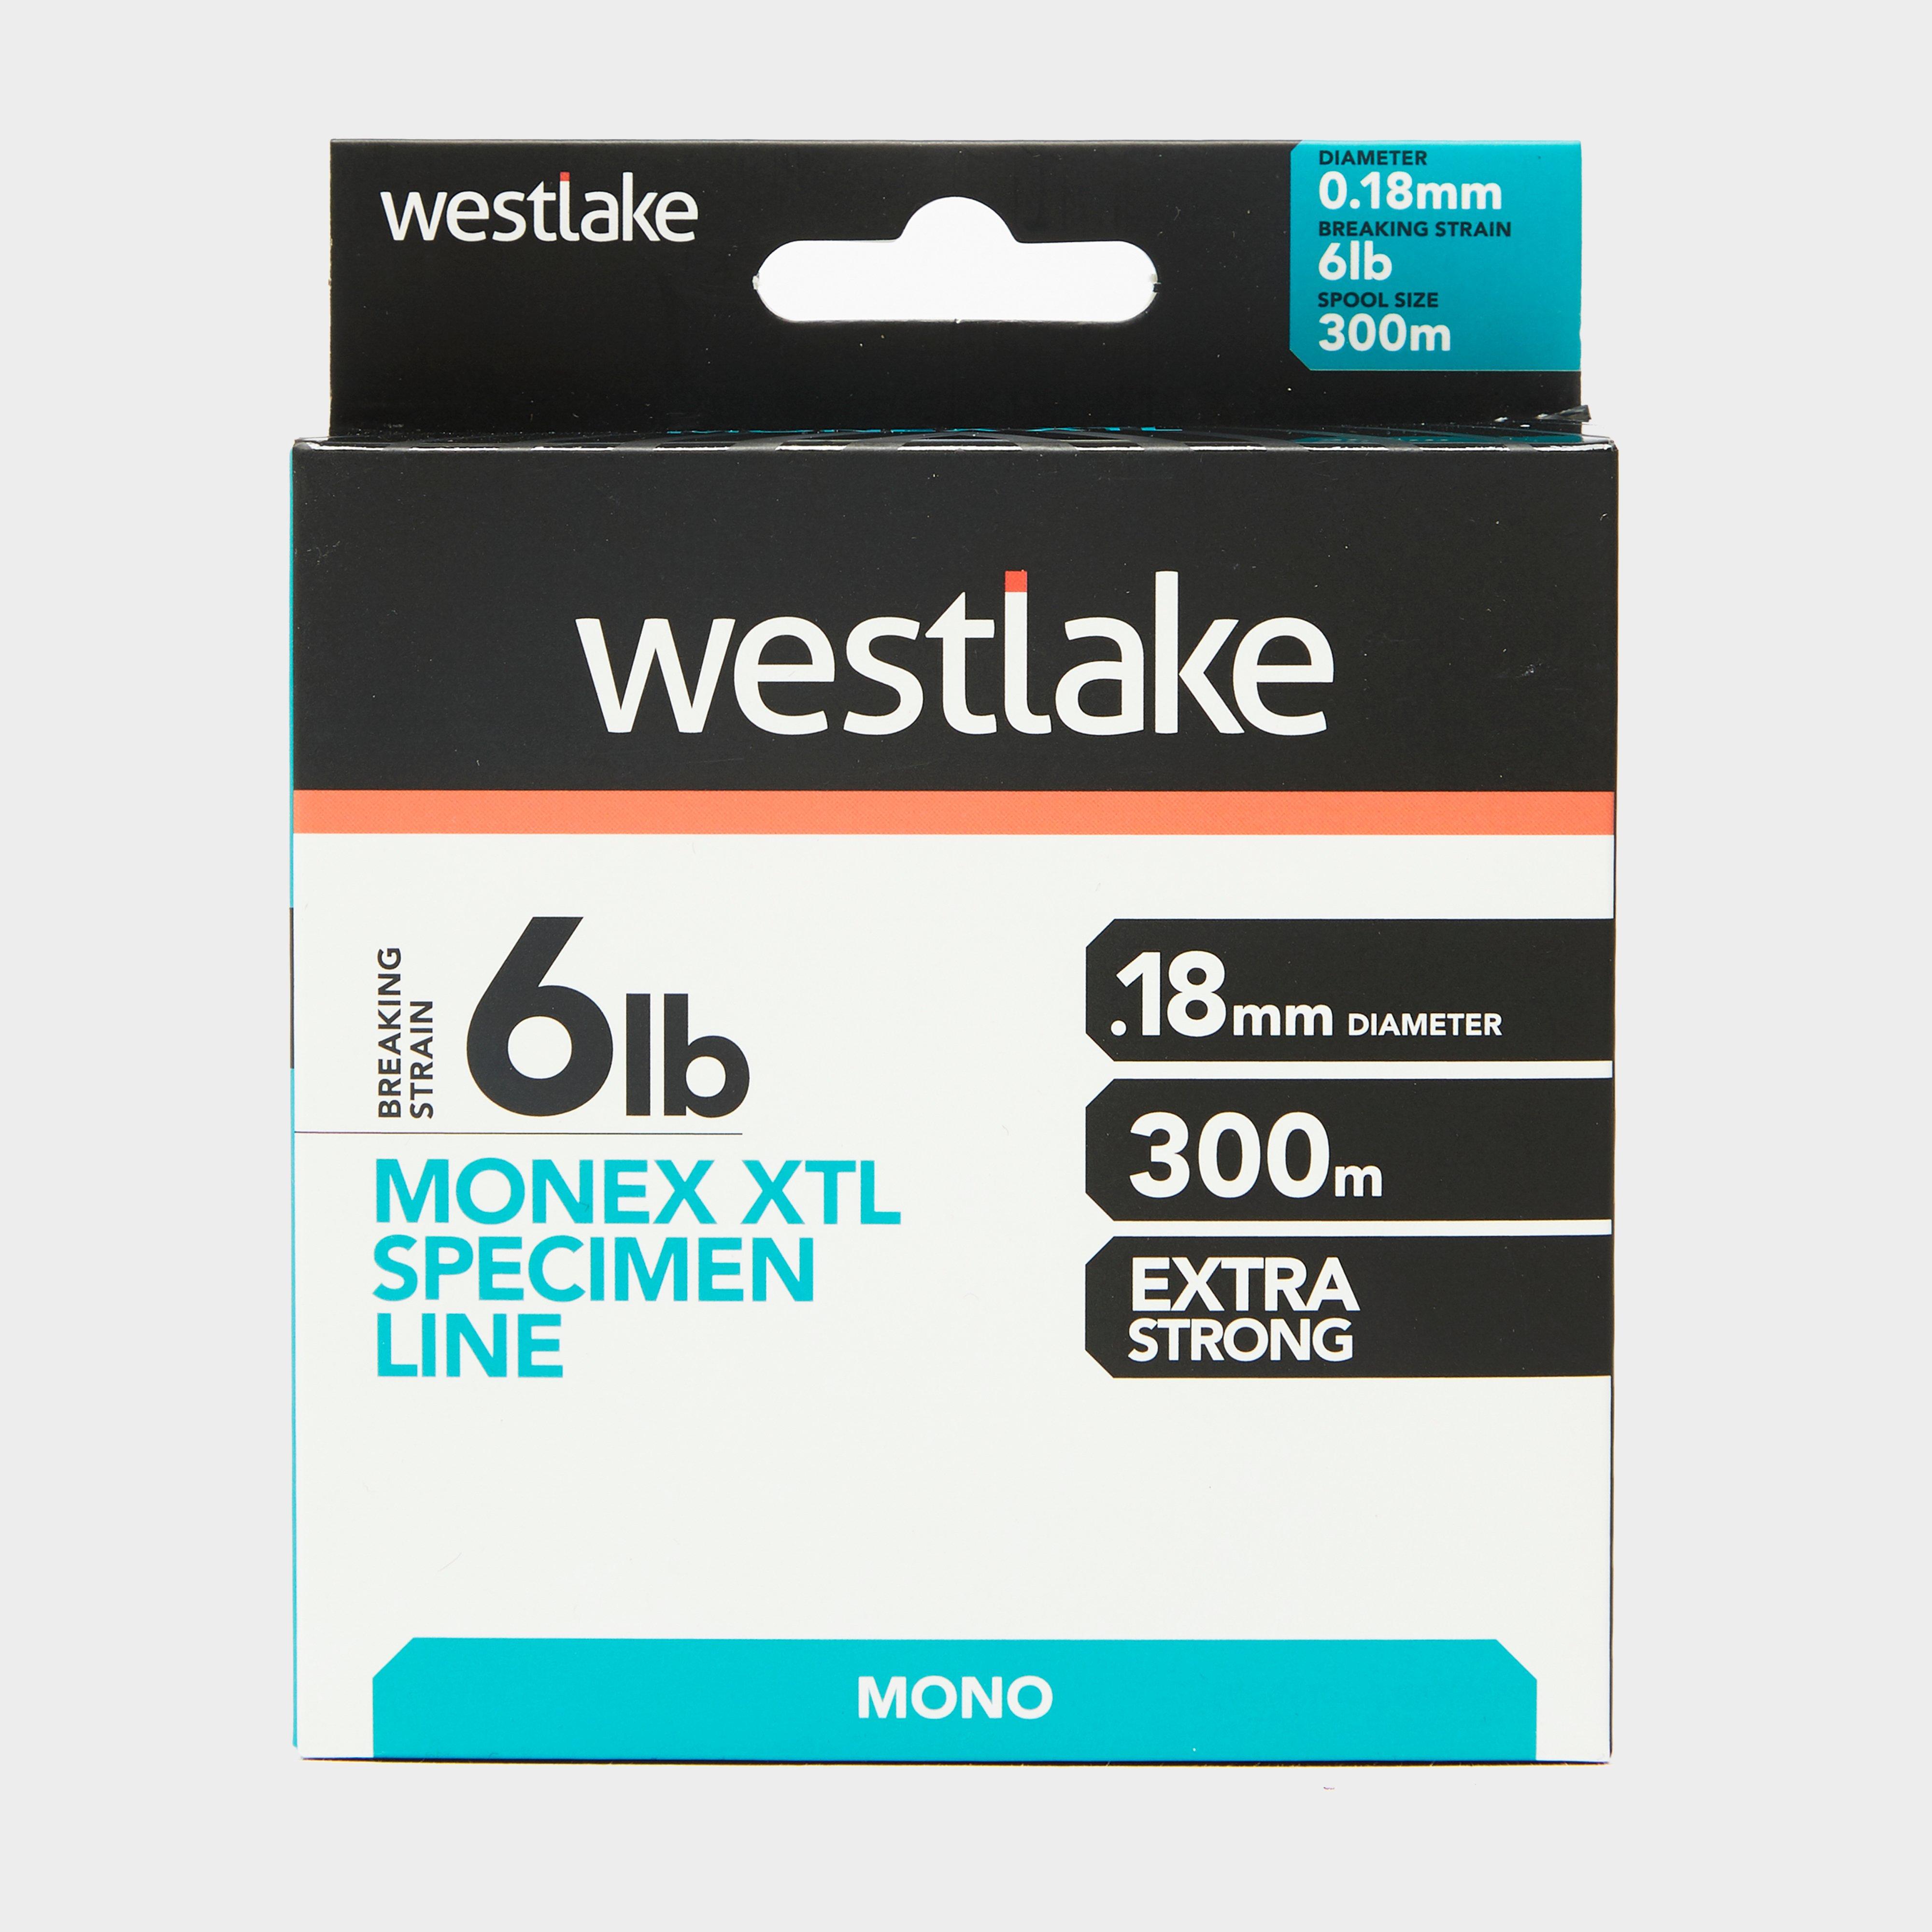 Westlake Xl Specimen Mono 6lb 23mm 300m - Multi/23mm  Multi/23mm